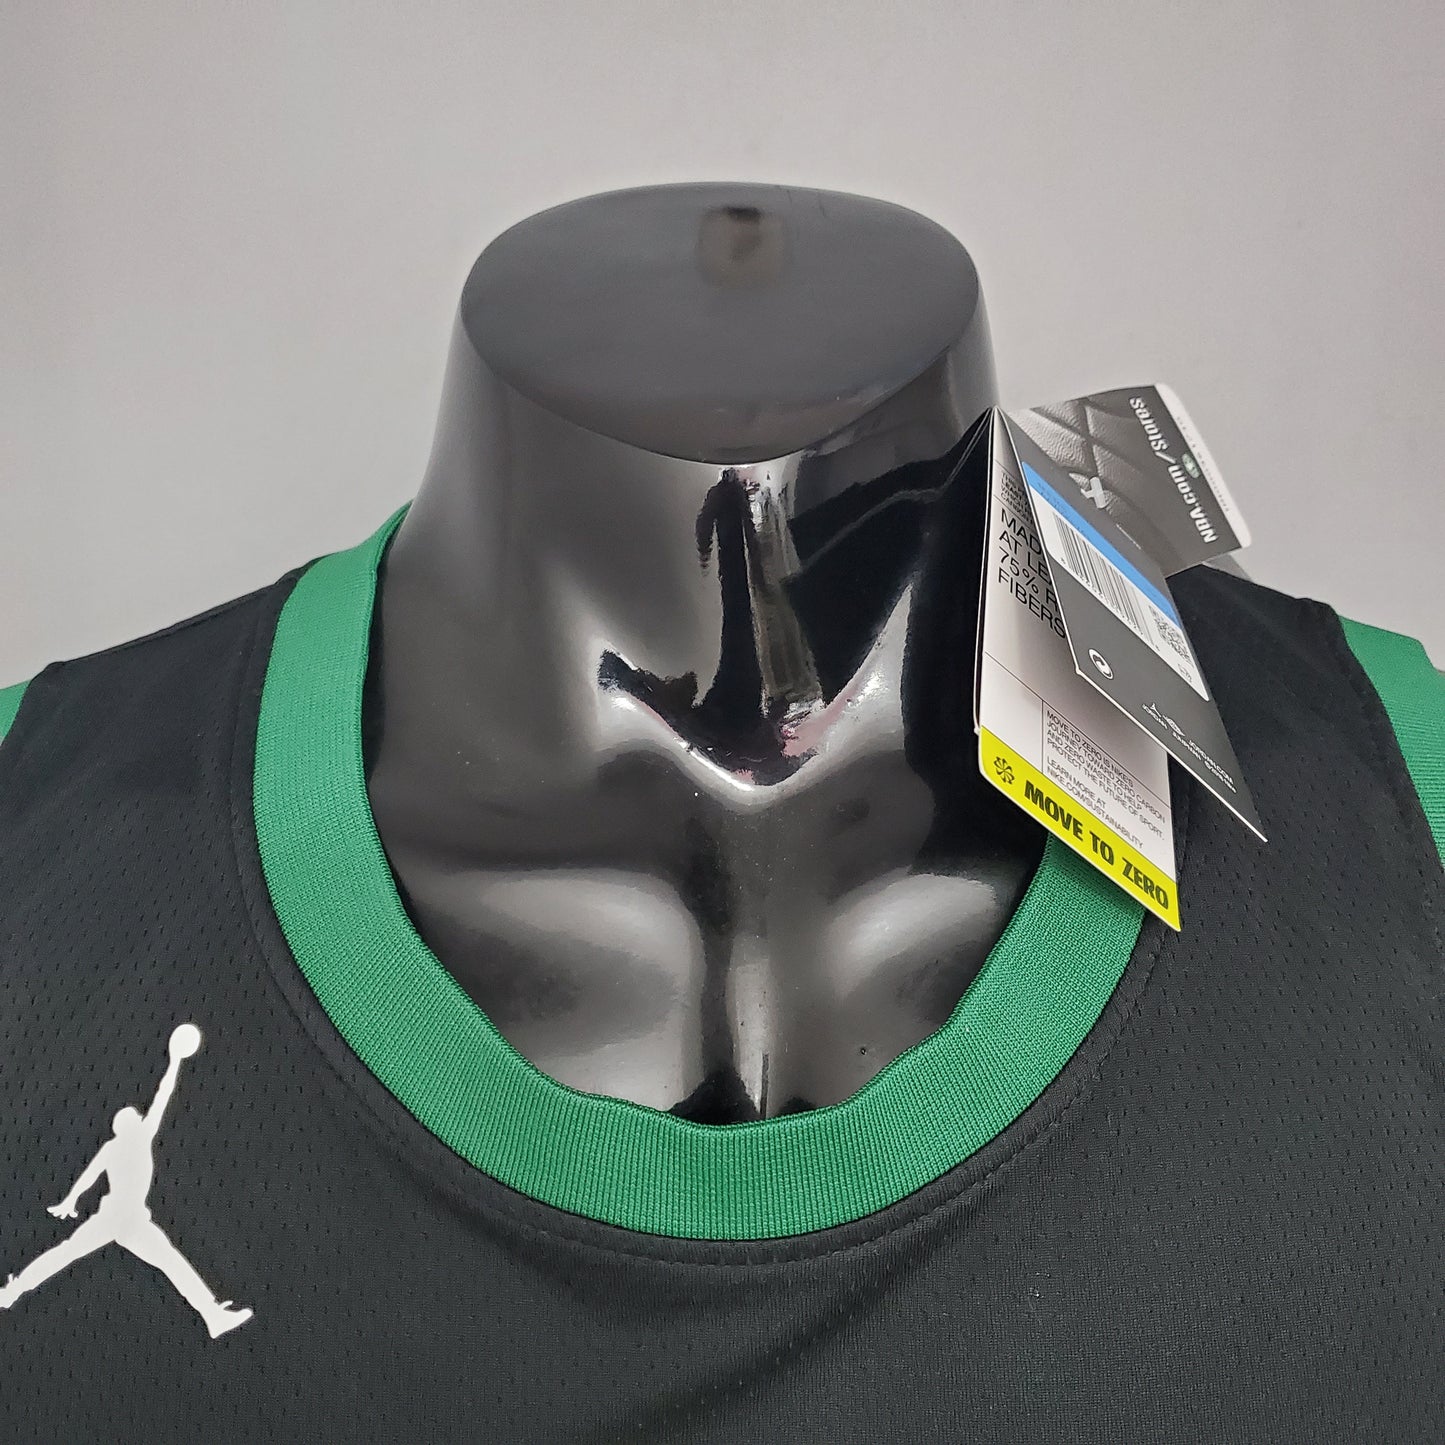 Boston Celtics jersey